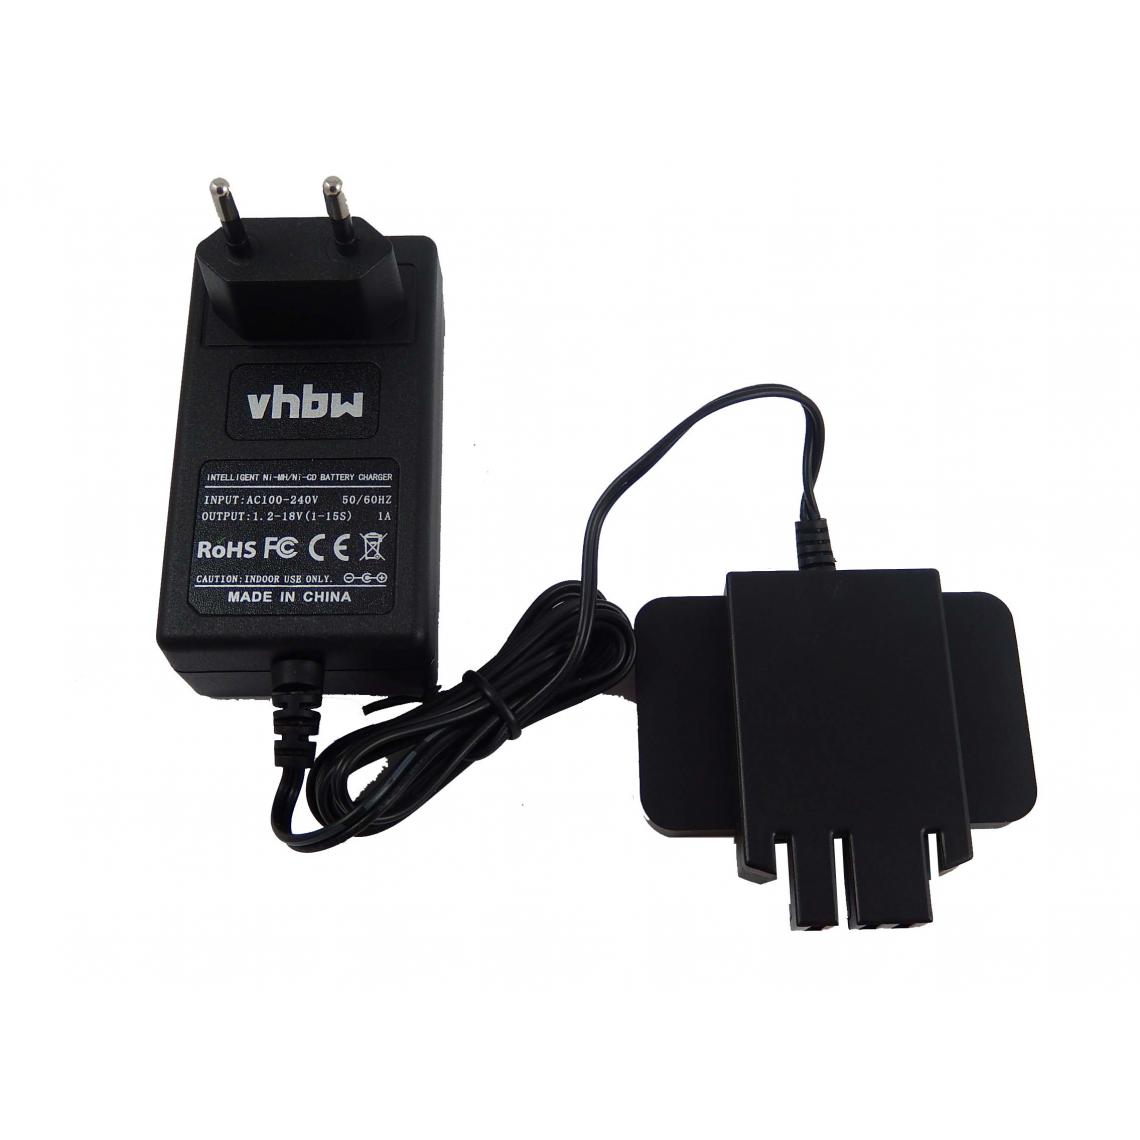 Vhbw - vhbw Chargeur compatible avec Milwaukee 0614-20, 0614-24, 0615-24, 0616-20, 0616-24, 0617-24, 49-24-0150 batteries Ni-Cd, NiMH d'outils - Clouterie